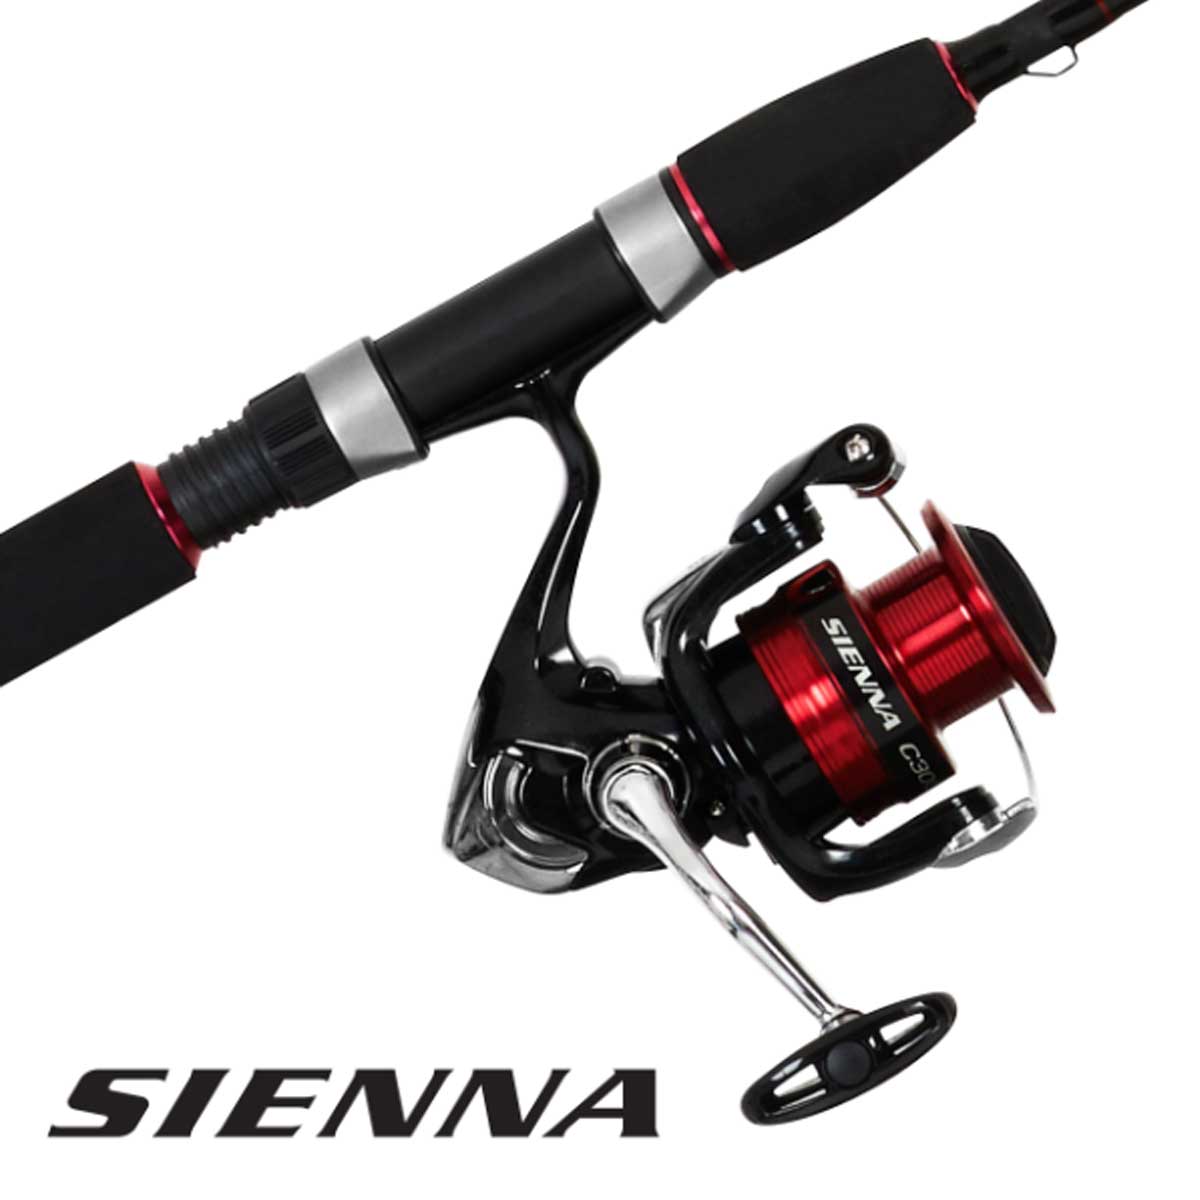 Shimano SIENNA EGI / SQUID Spin combo 2500 reel-7'6 2 piece 3-6 kg rod